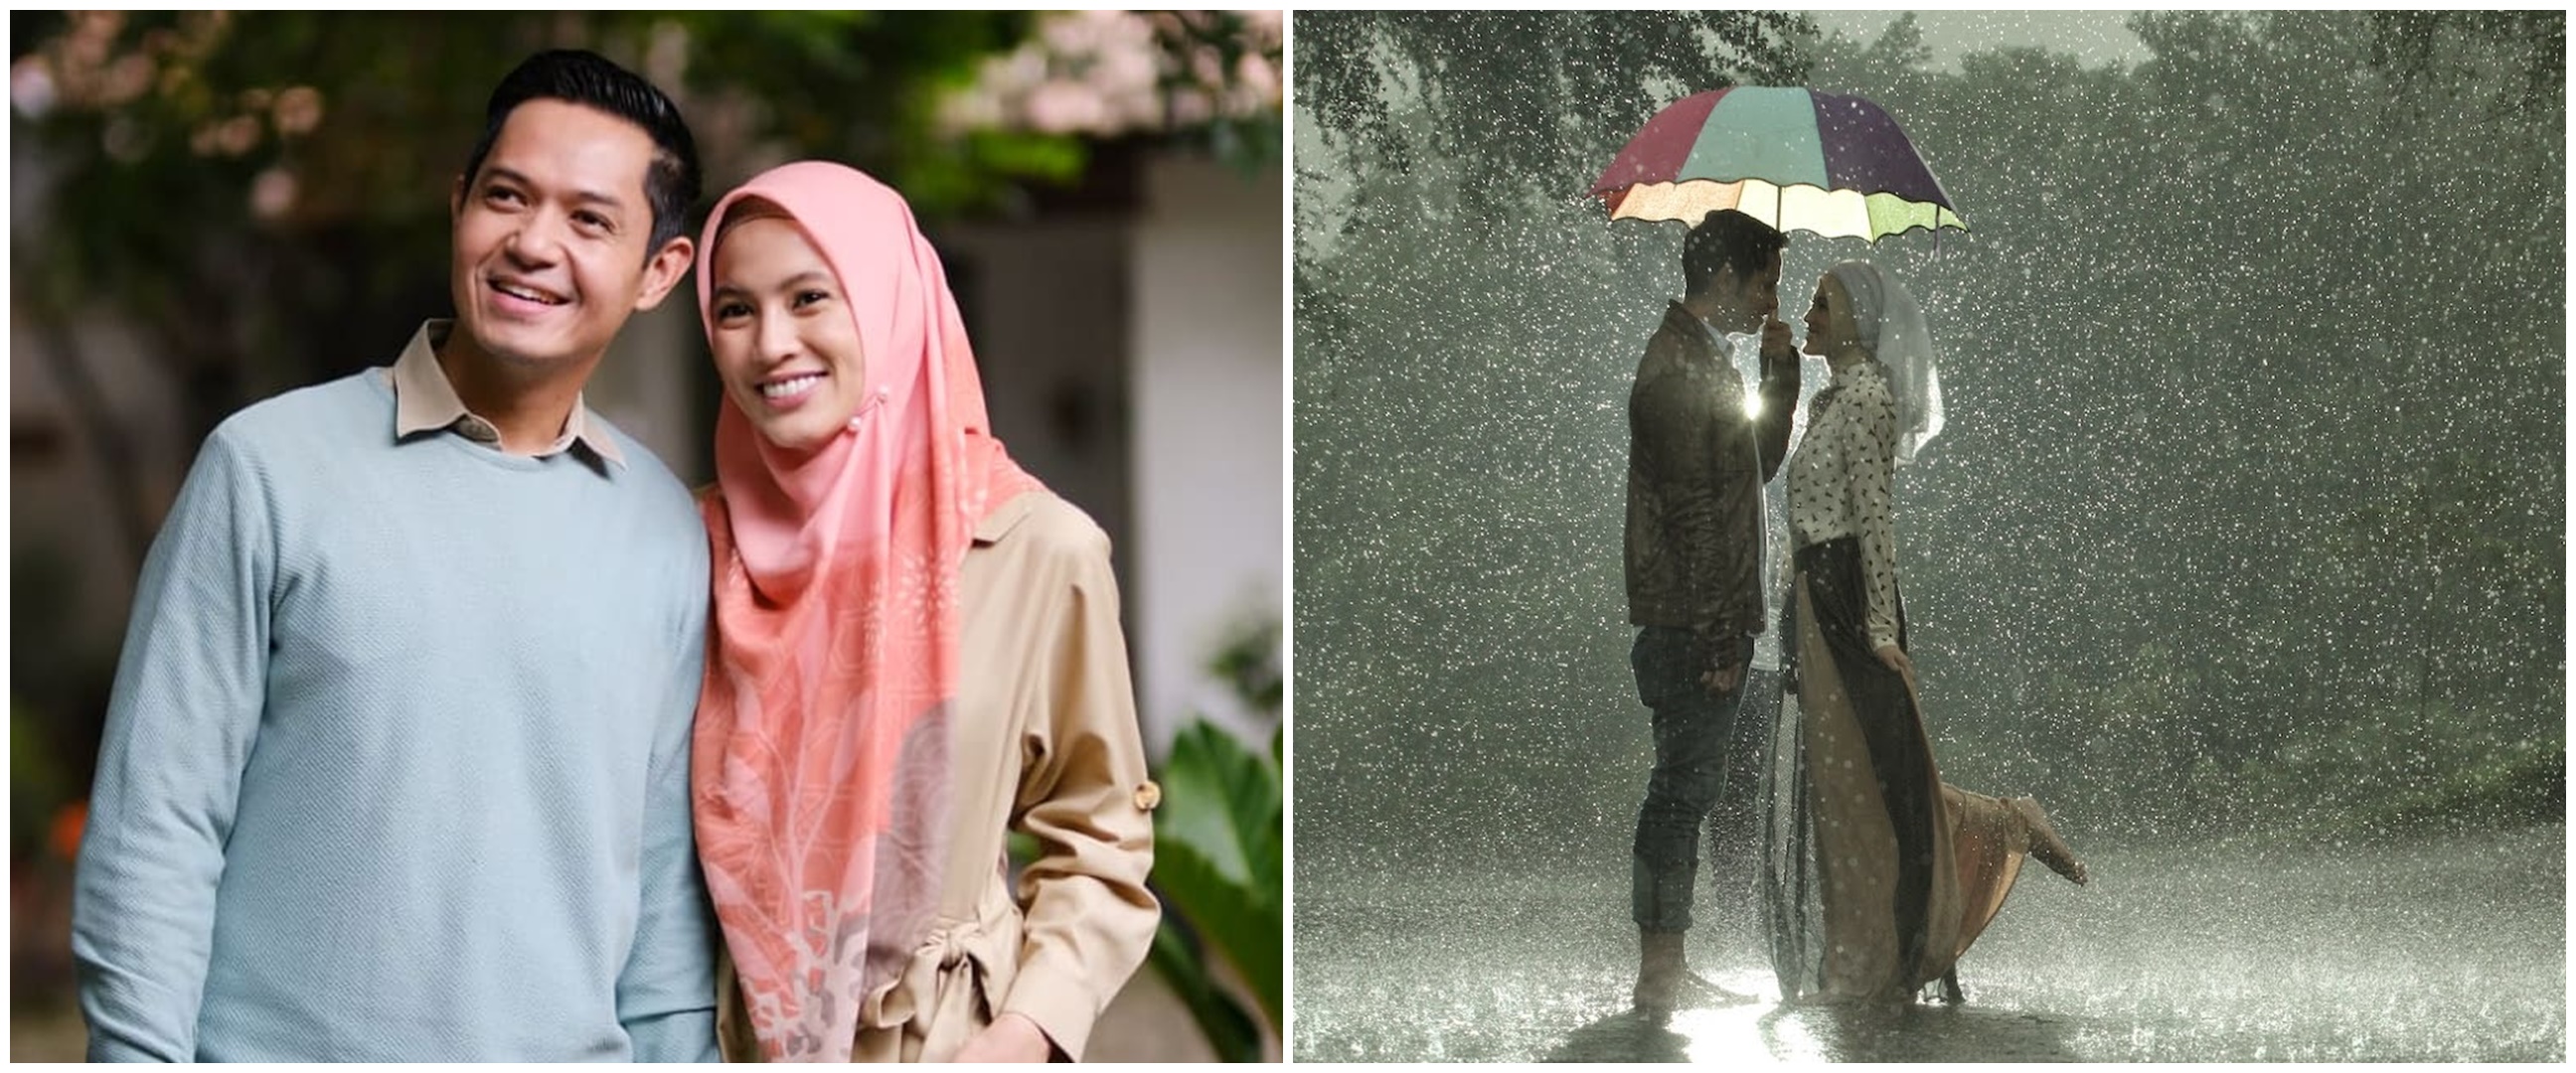 7 Potret lawas prewedding Alyssa & Dude, pose romantis di bawah hujan